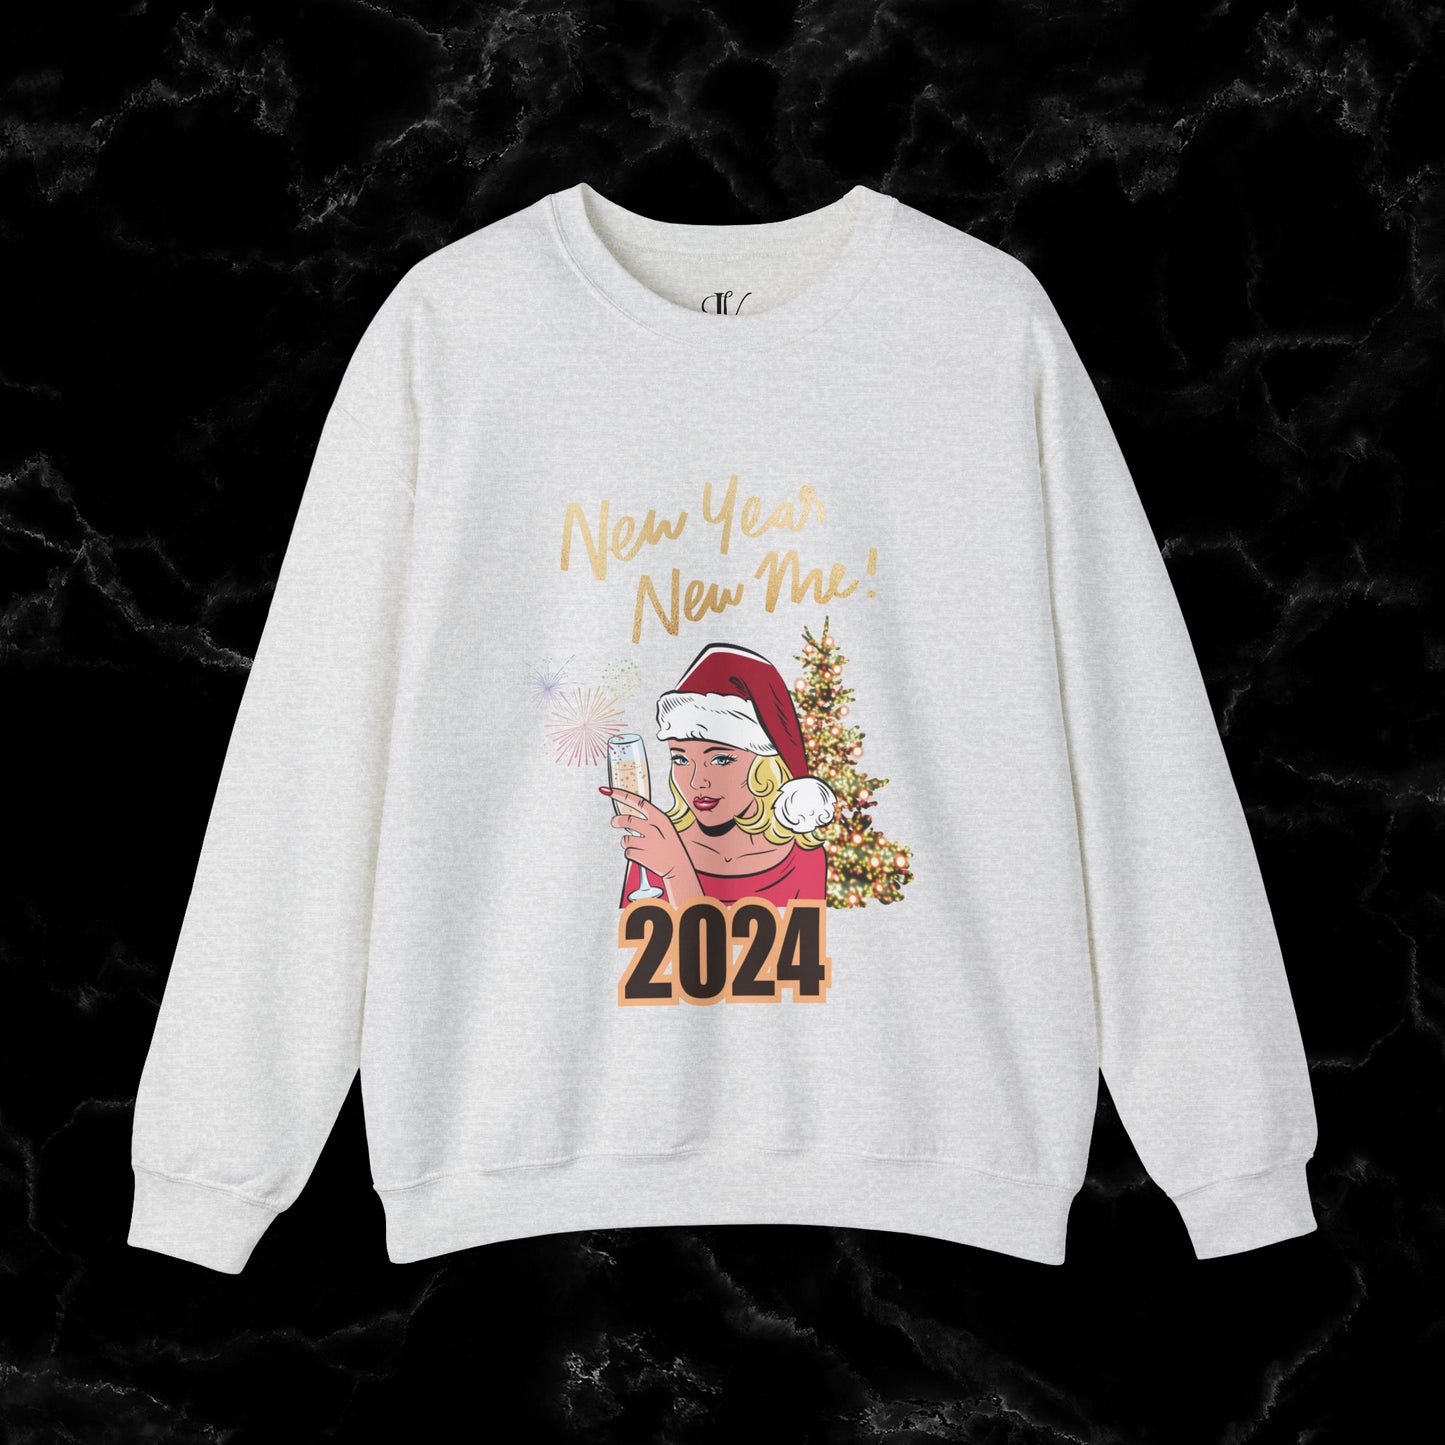 New Year New Me Sweatshirt - Motivational, Inspirational Resolutions Shirt, Christmas Family Tee Sweatshirt S Ash 